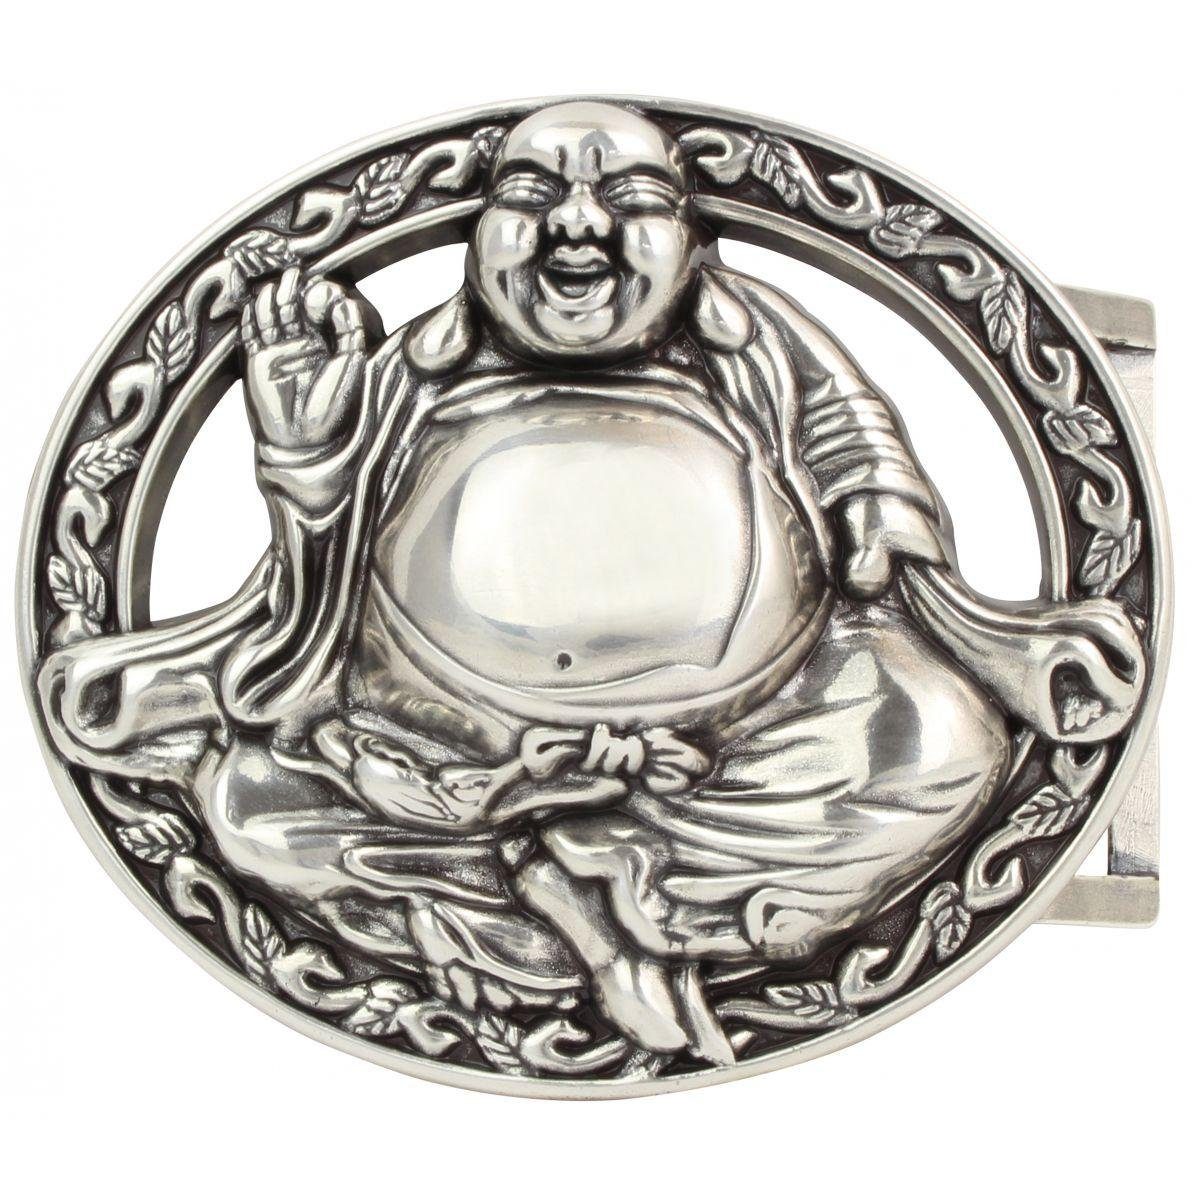 BELTINGER bi 40mm Gürtel 4,0 Buckle Gürtelschließe - Buddha Wechselschließe Gürtelschnalle cm -